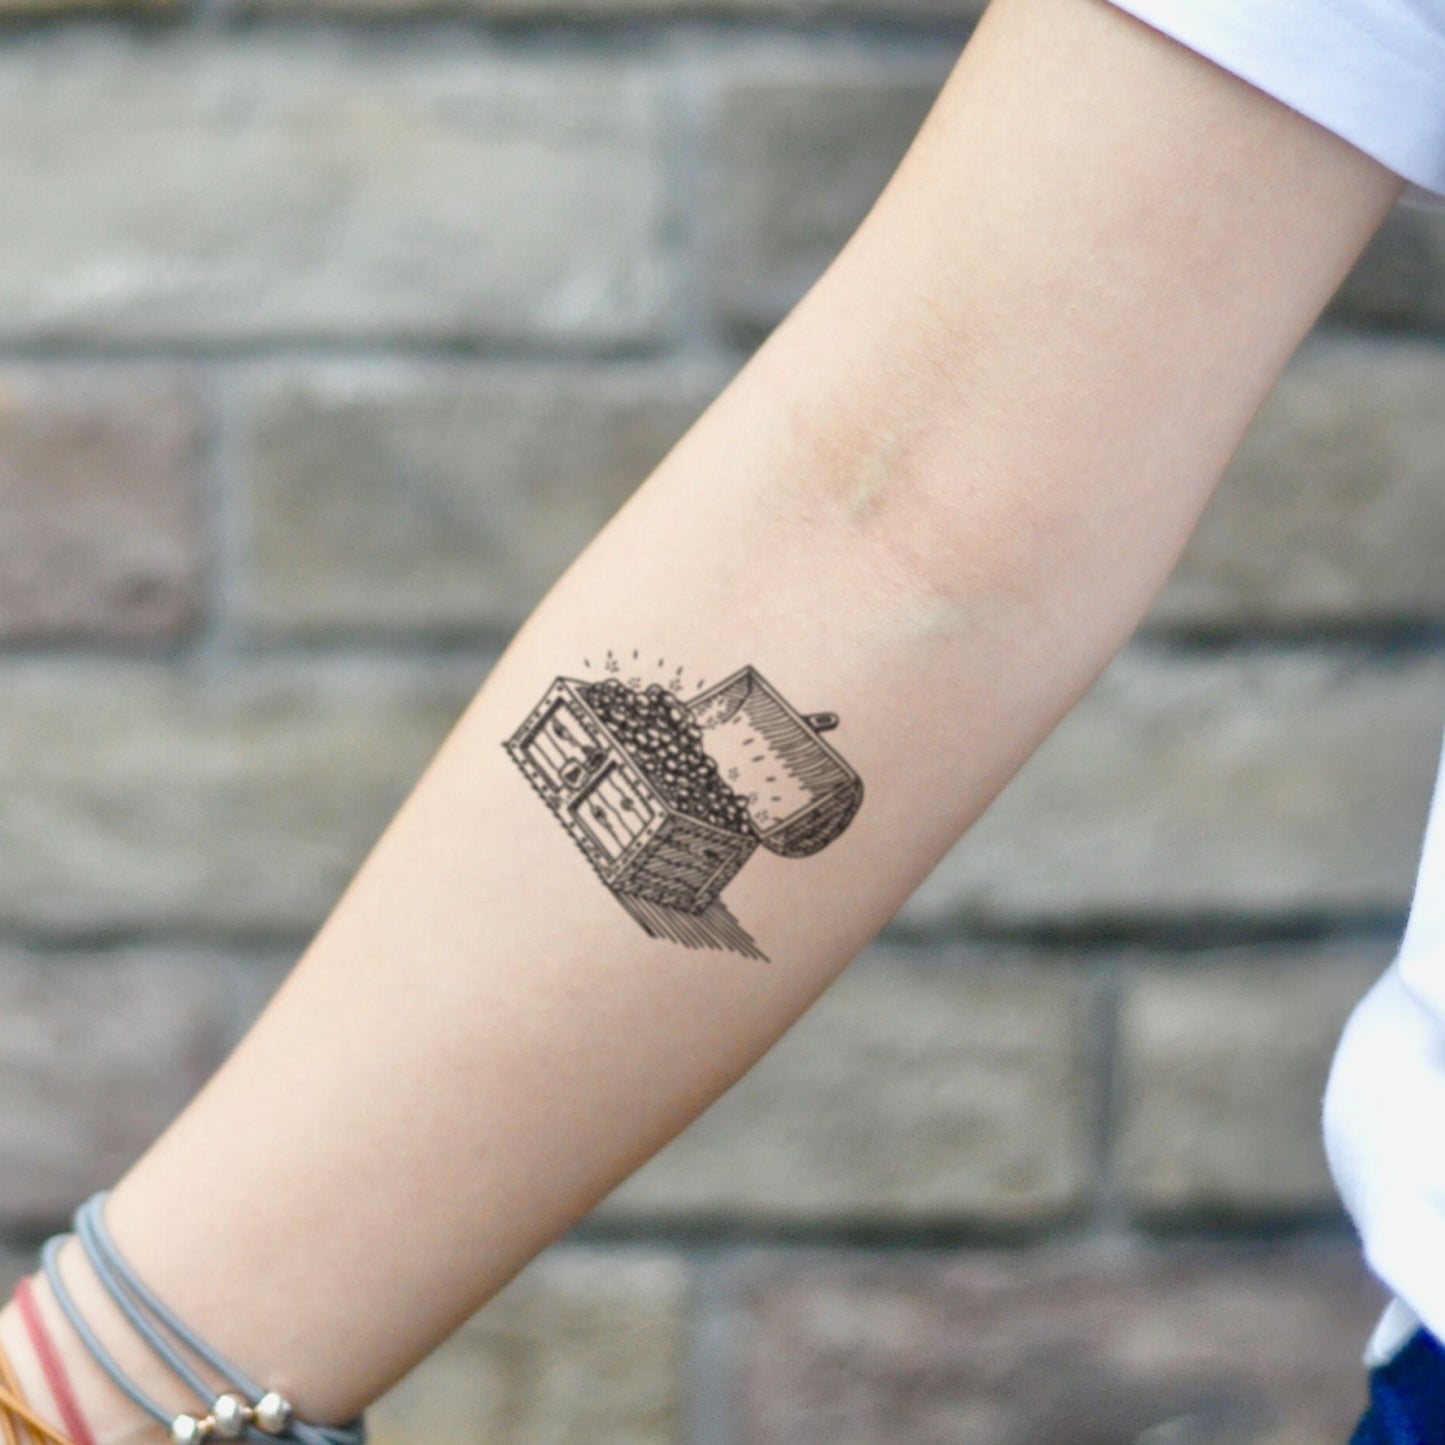 fake small treasure chest illustrative temporary tattoo sticker design idea on inner arm